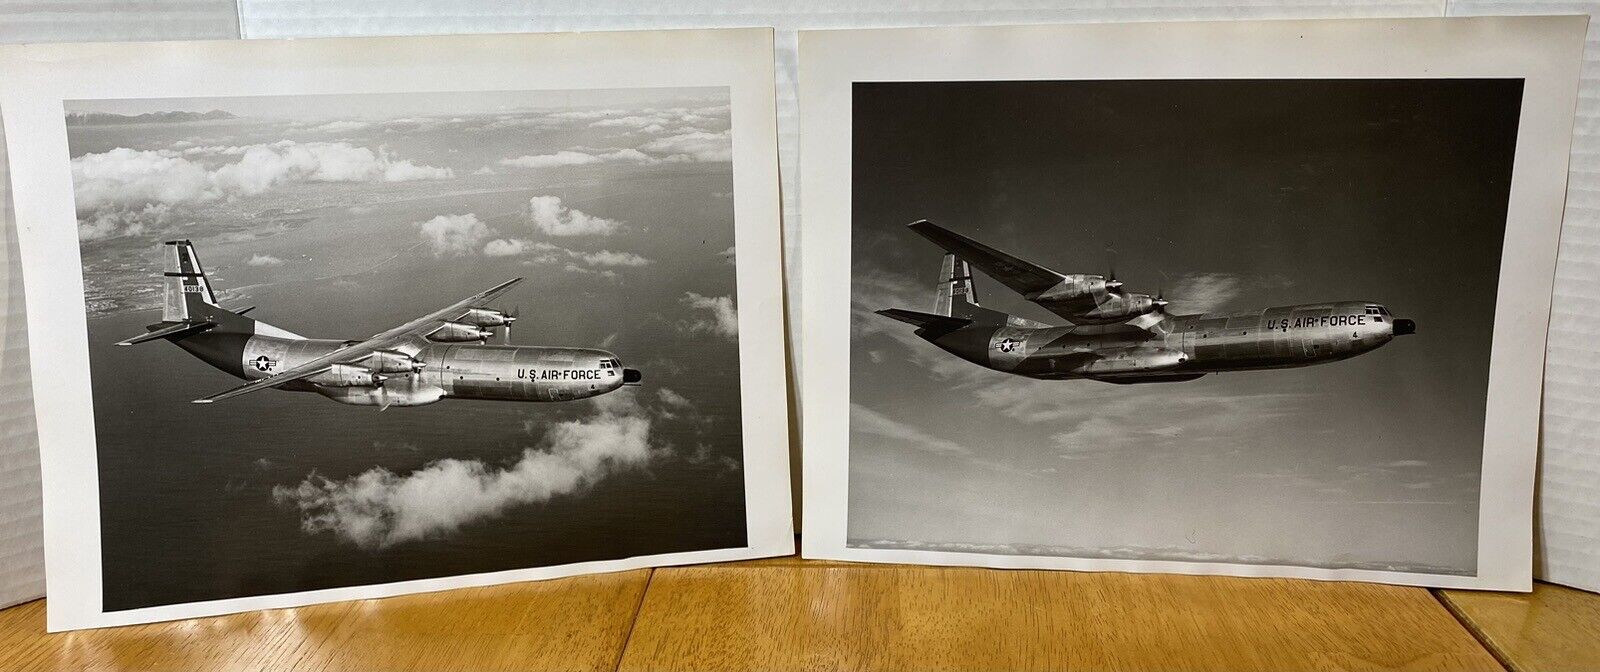 DOUGLAS C-133 CARGOMASTER  U.S AIR FORCE Vintage Photos Print